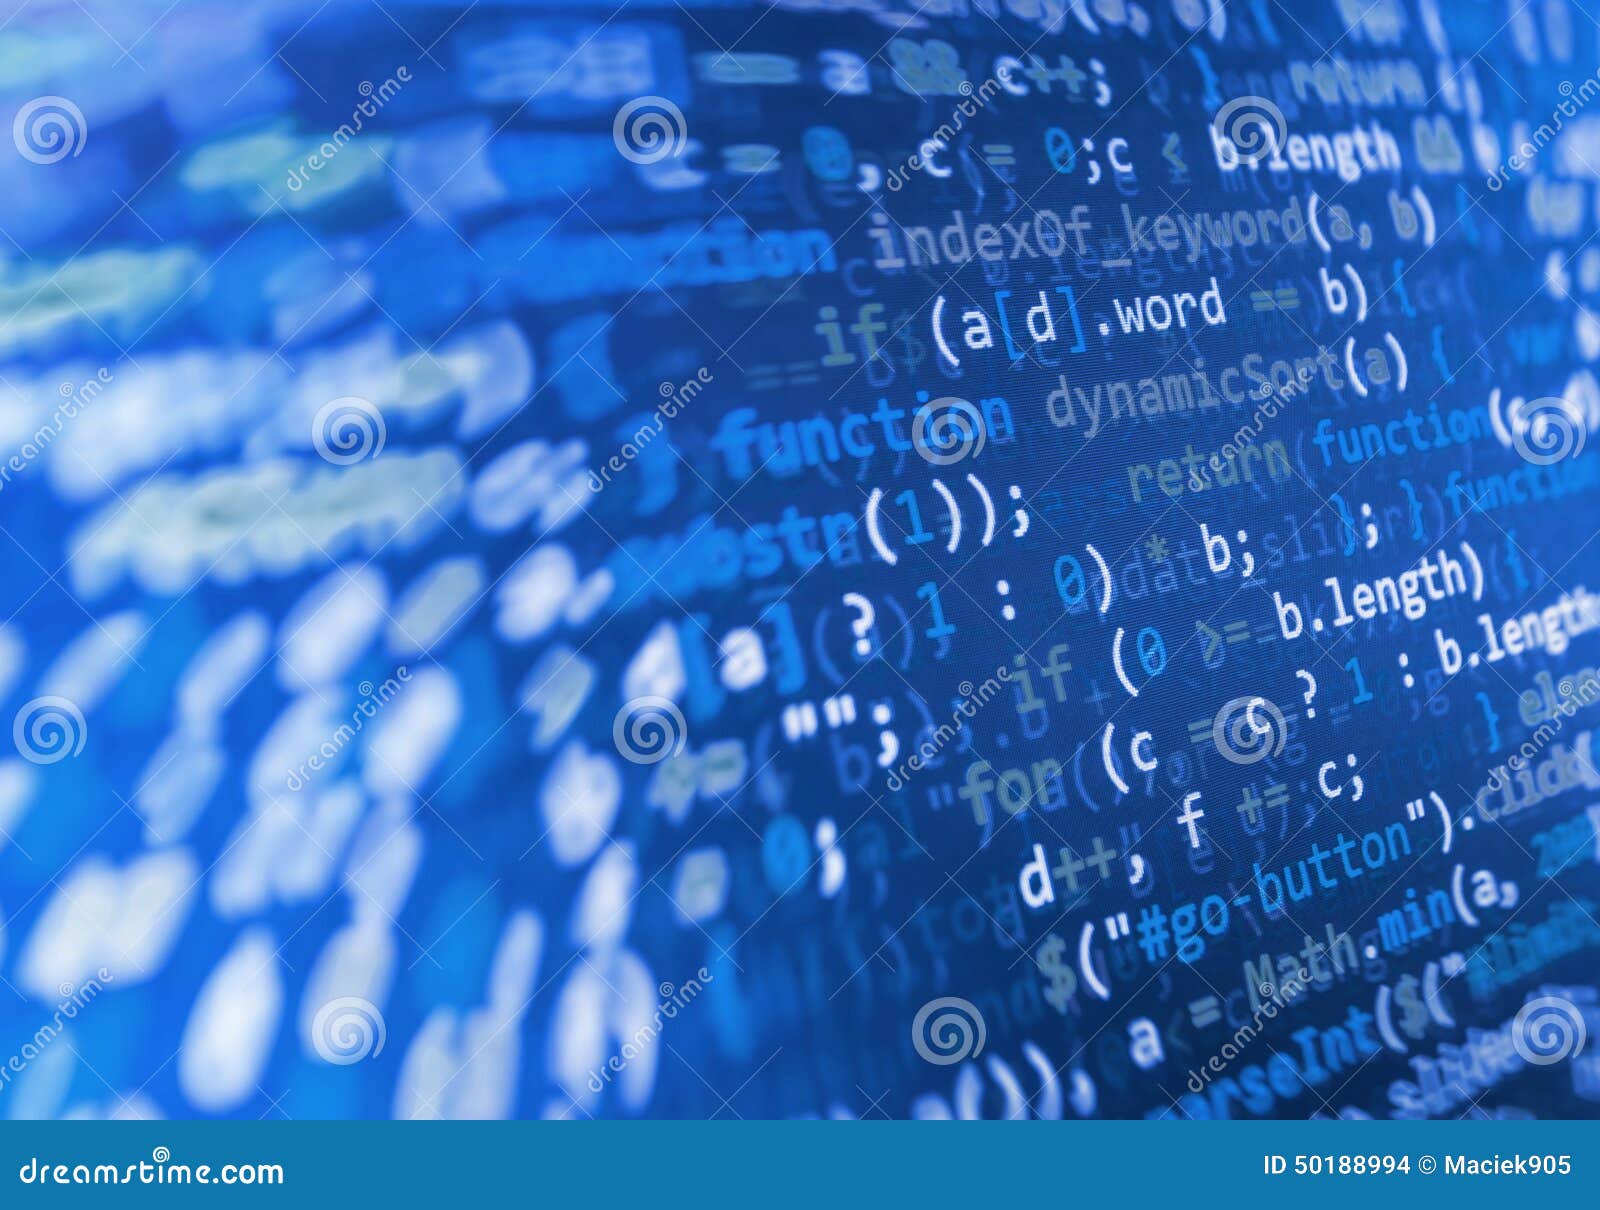 coding programming source code screen. colorful abstract data display. software developer web program script.